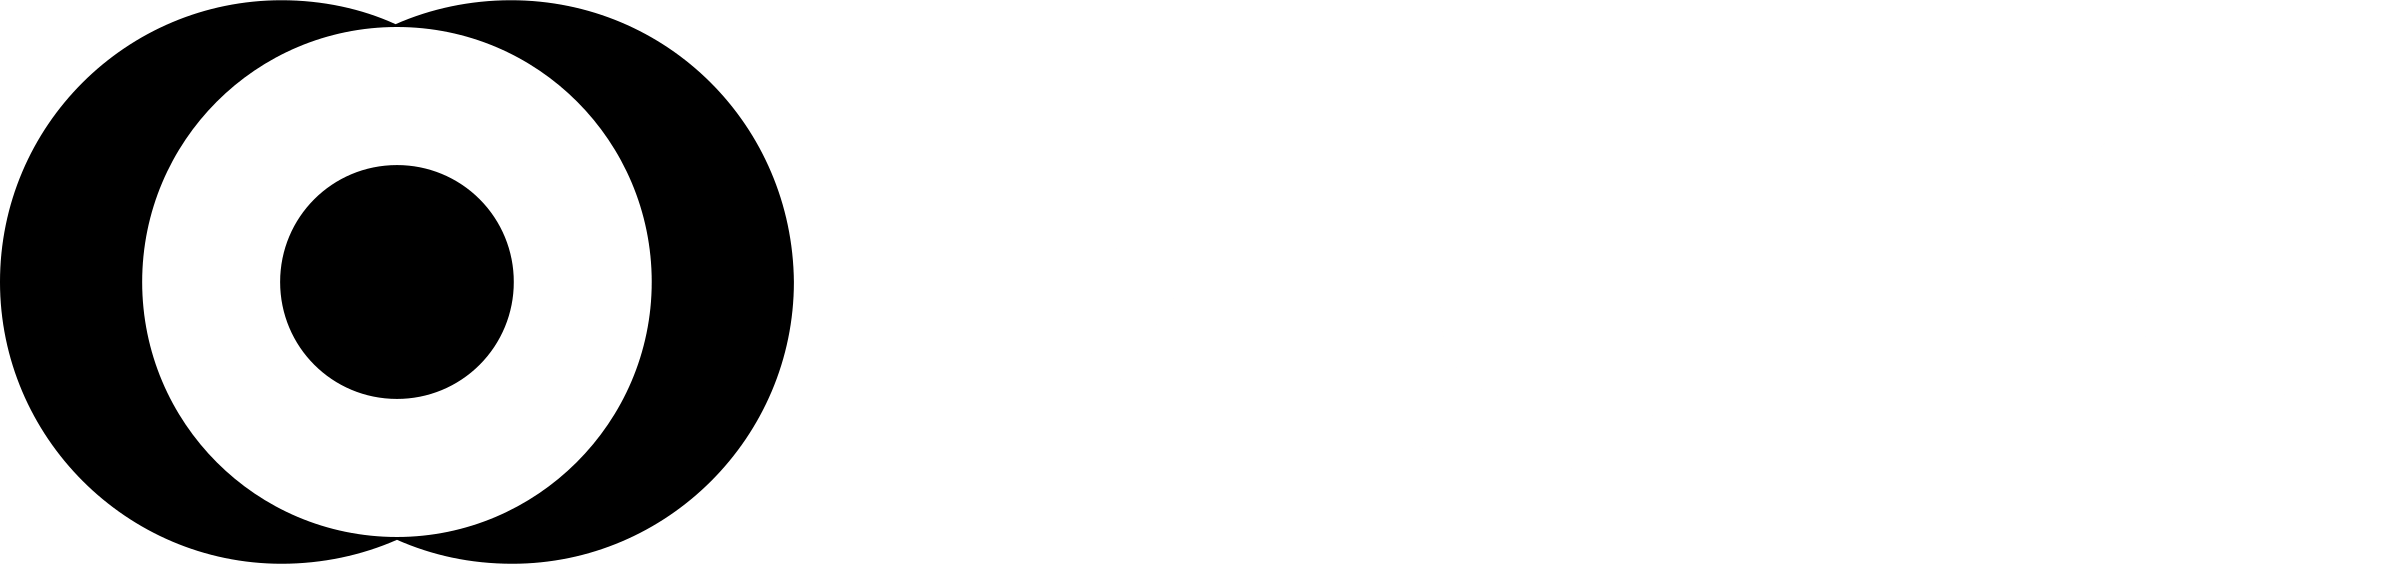 Mufg Logo - MUFG Logo PNG Transparent & SVG Vector - Freebie Supply